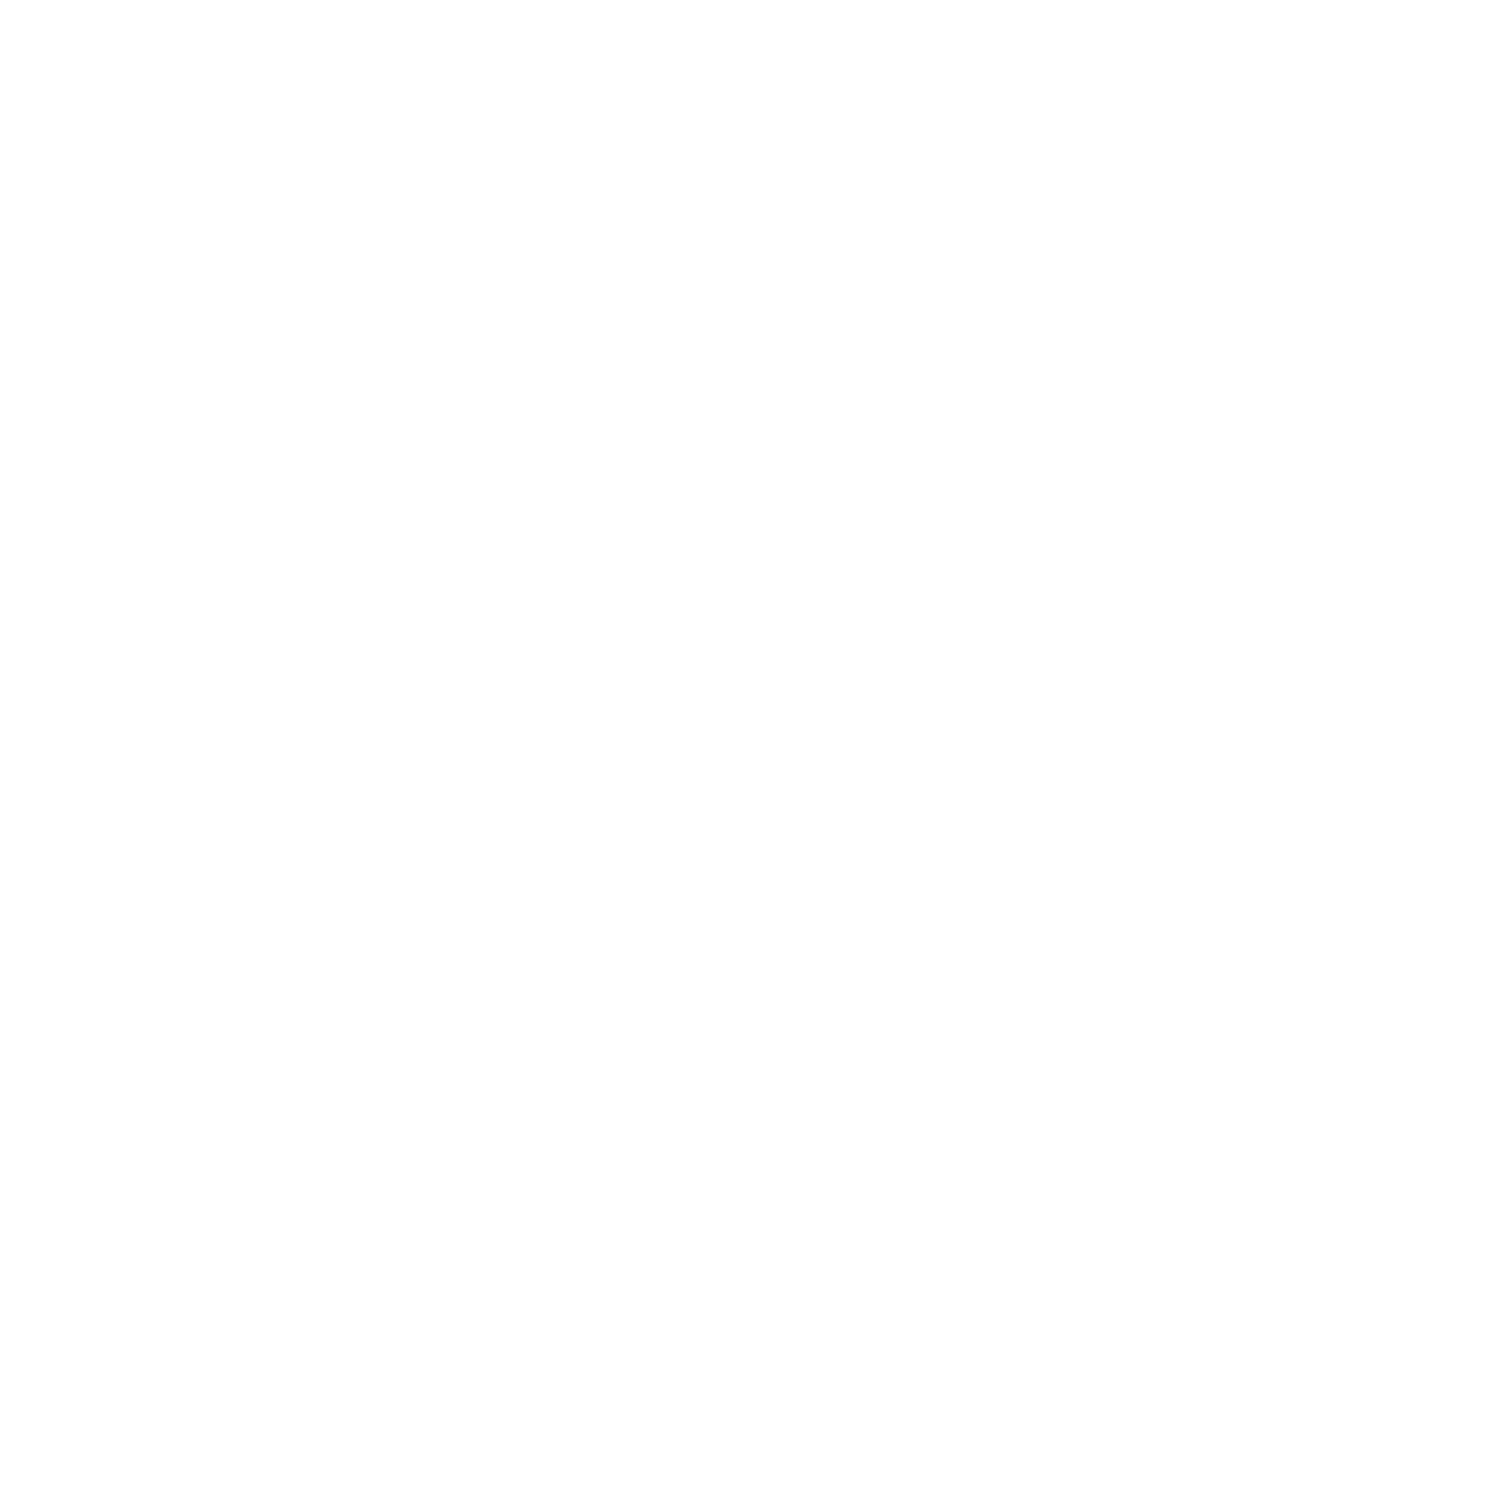 Caan Rose Estates Ltd - Slough : Letting agents in West Drayton Greater London Hillingdon